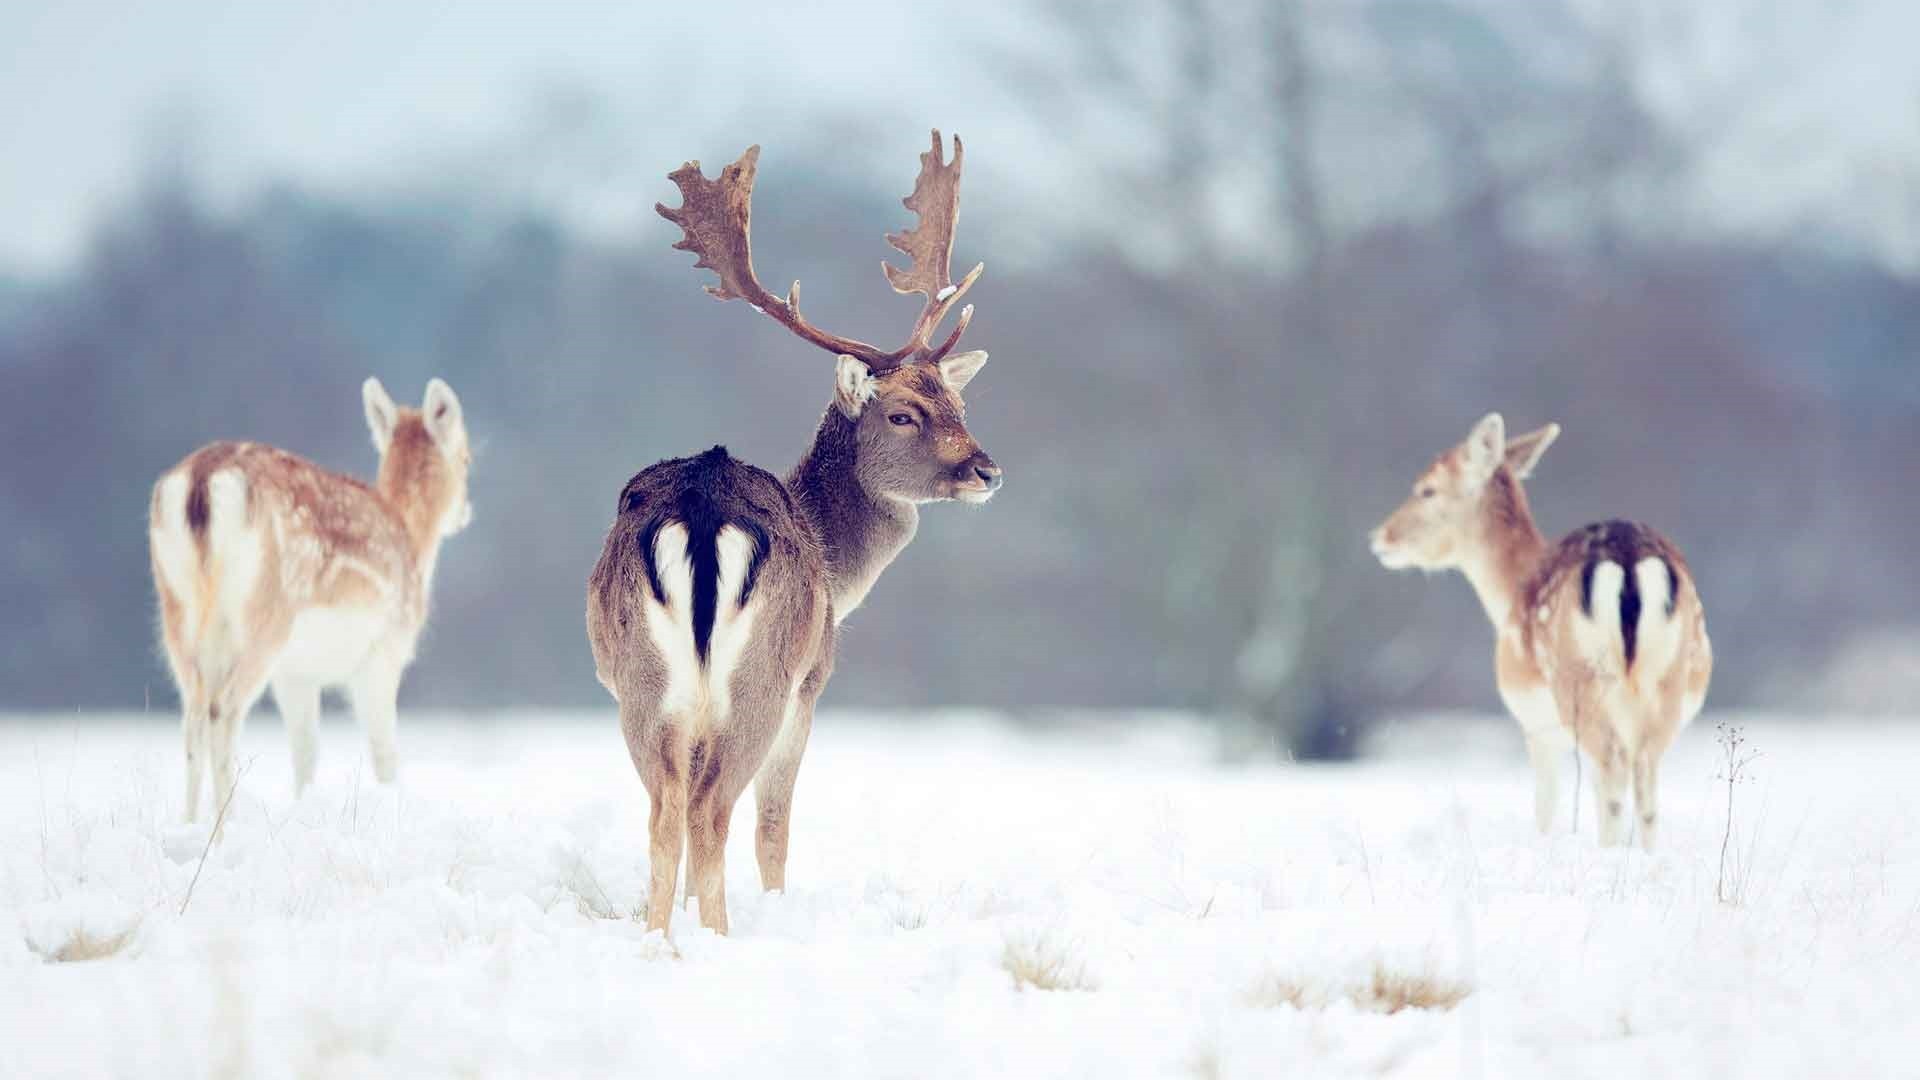 Reindeer wallpaper photo hd